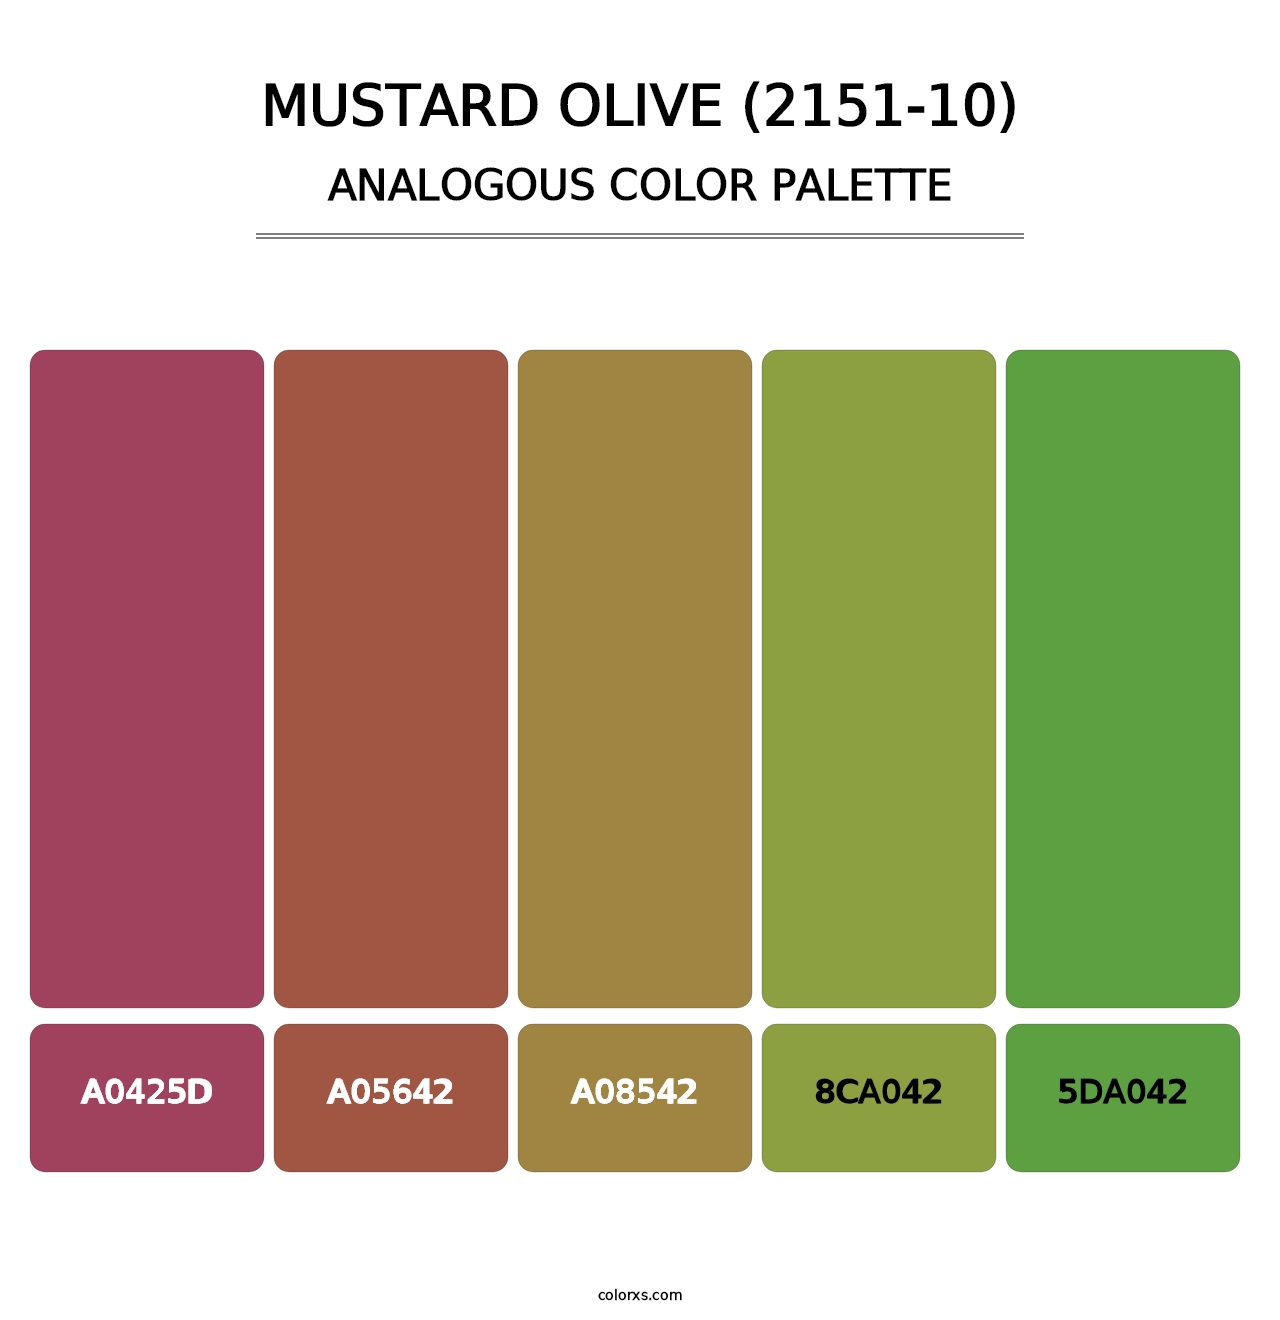 Mustard Olive (2151-10) - Analogous Color Palette